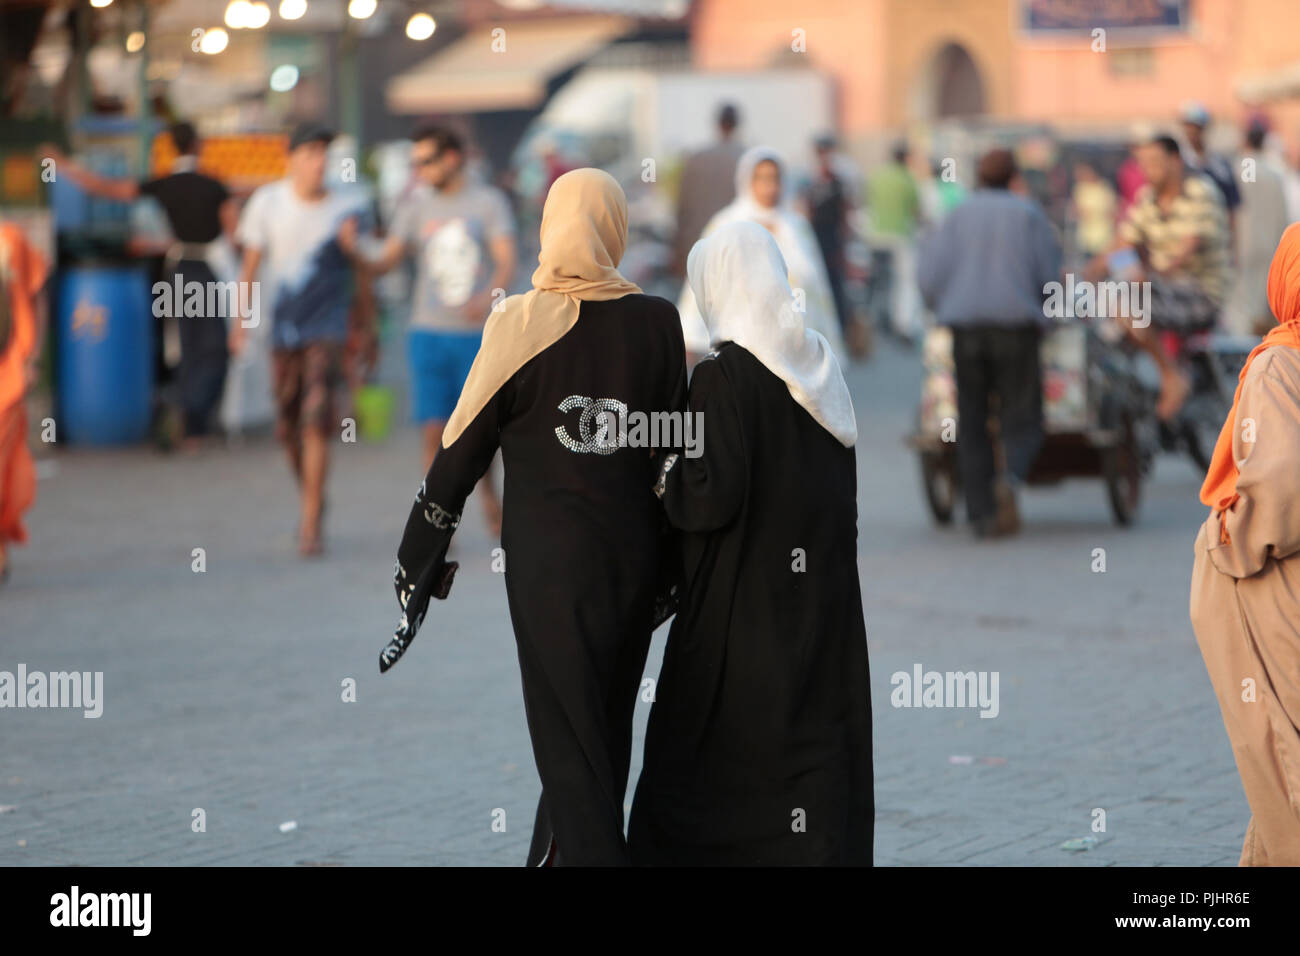 Moroccan wearing a chador with "Chanel" logo. Marrakech. Morocco Stock  Photo - Alamy